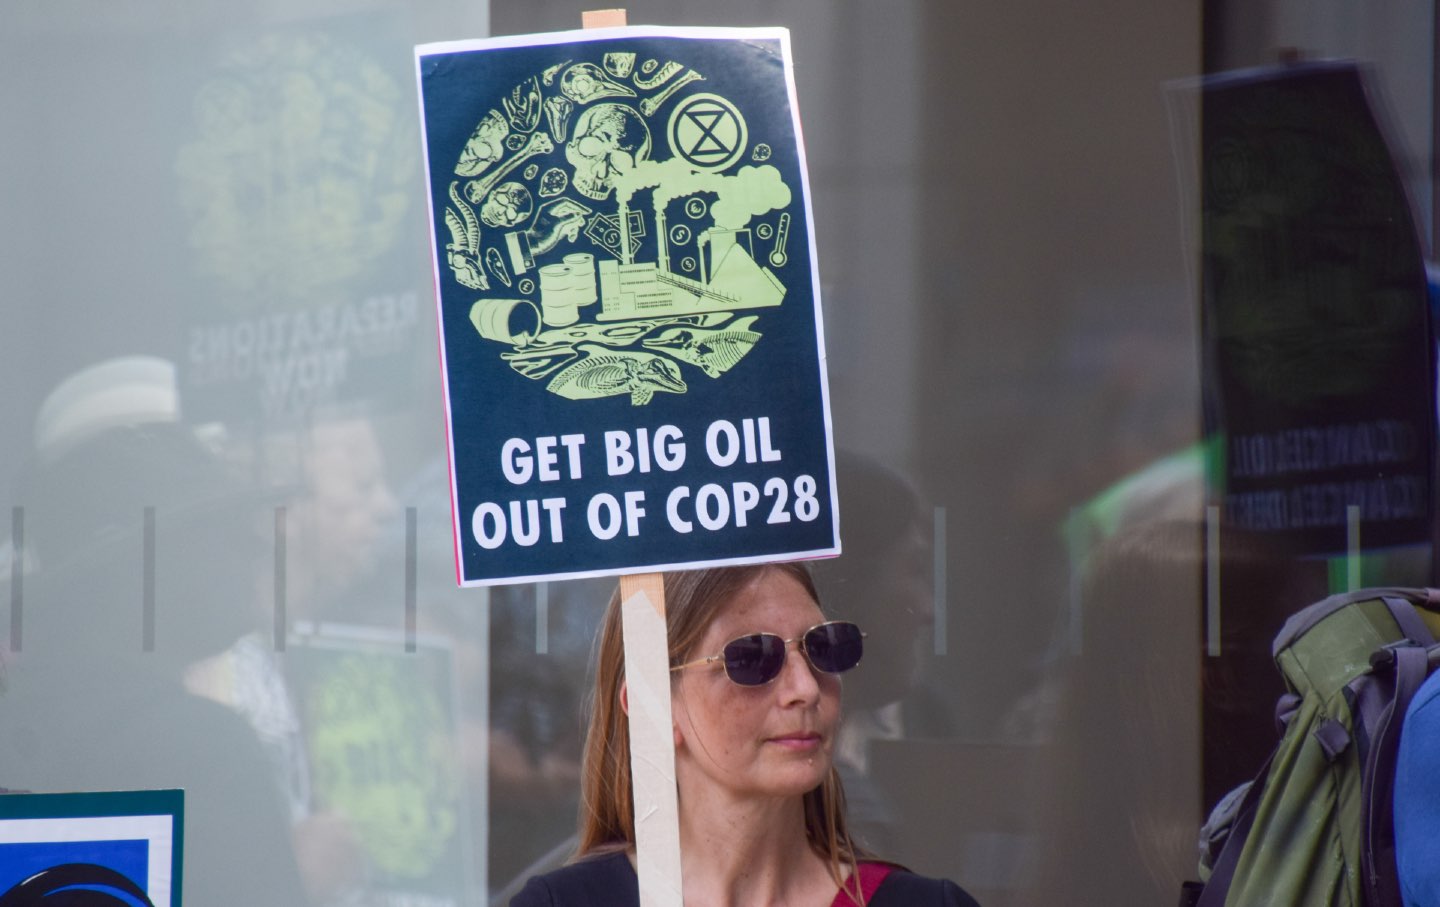 get big oil out of cop28! poster/ protester extinction rebellion